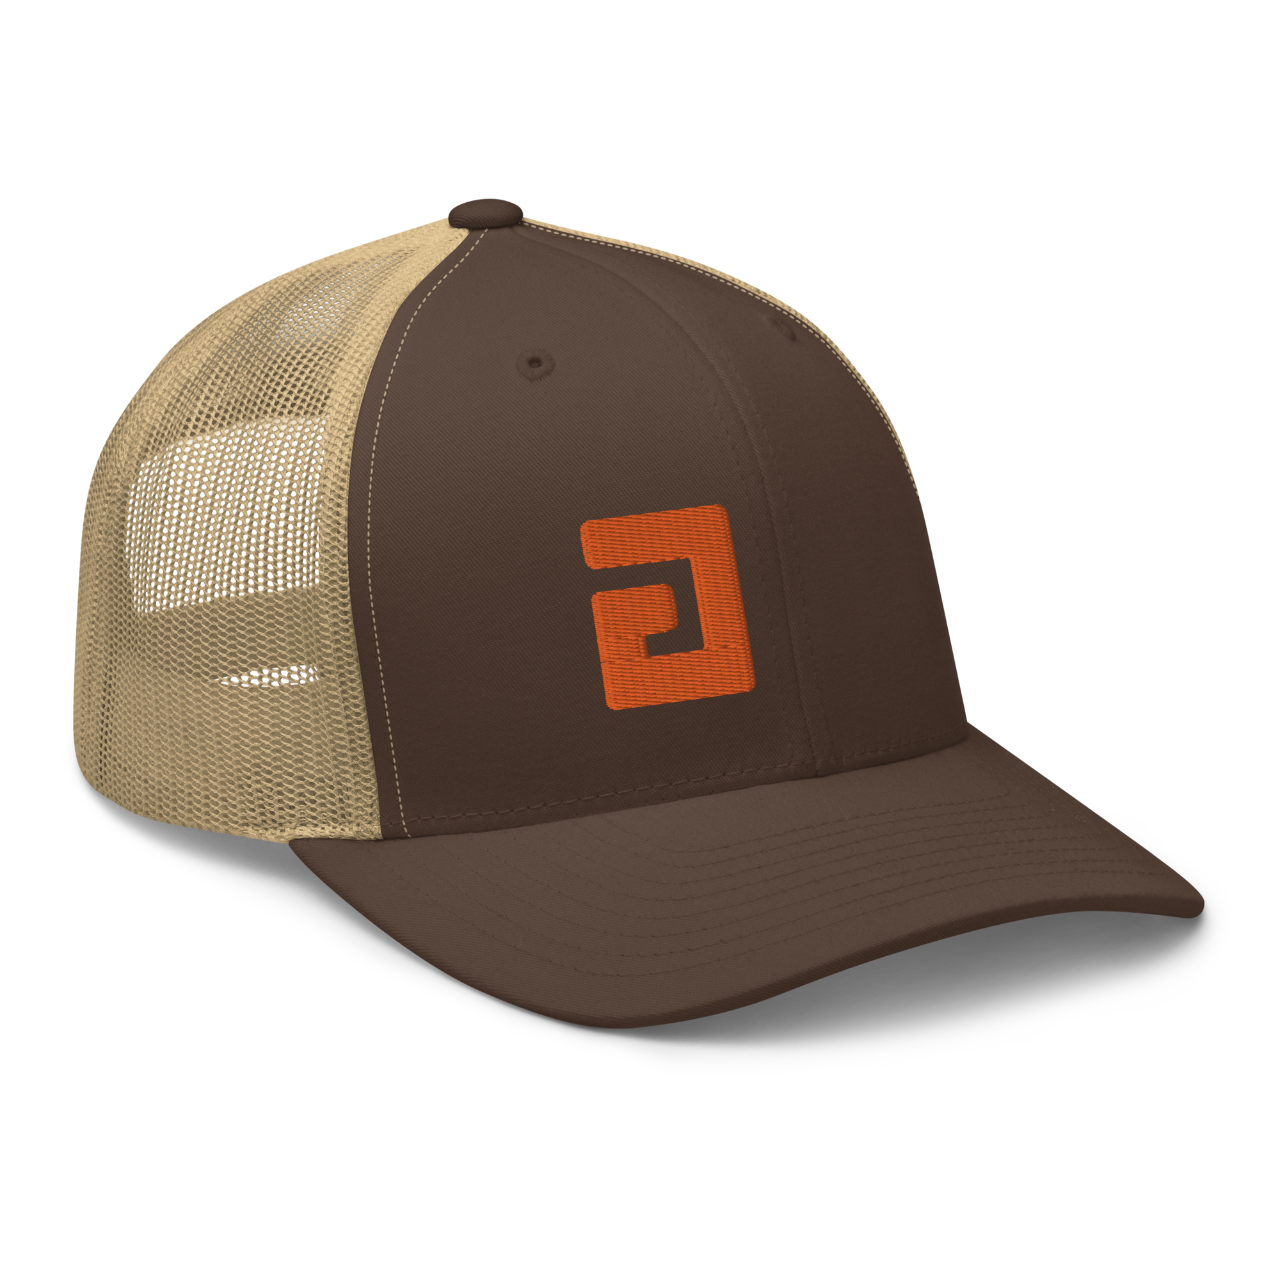 axsgtr axess electronics guitar music industry branded merchandise swag trucker cap hat brown khaki orange